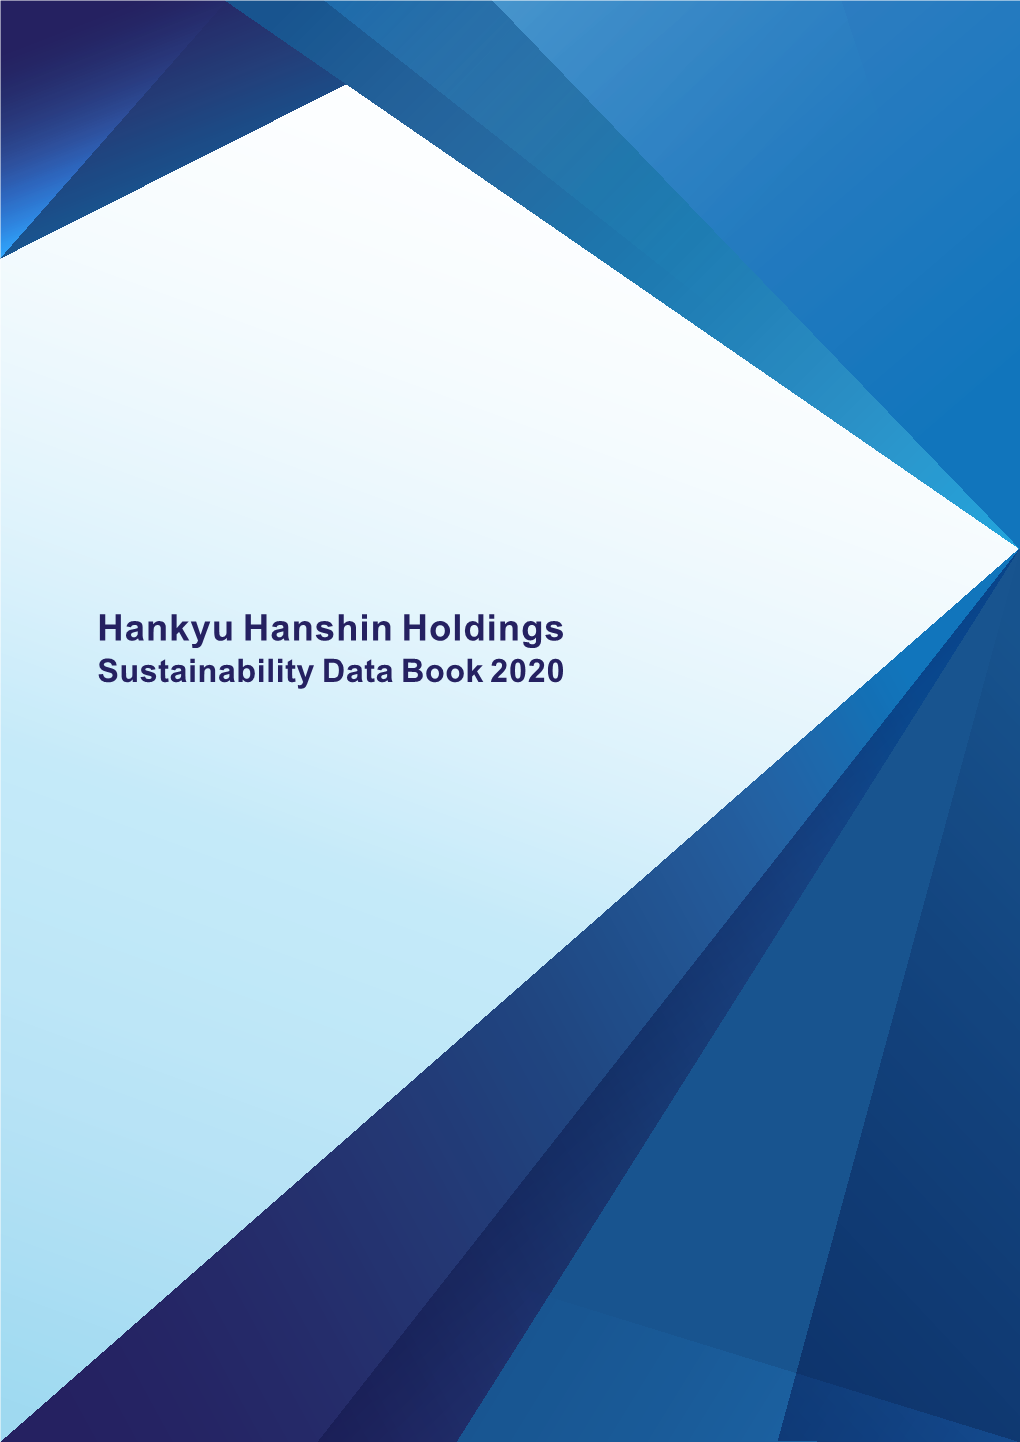 Hankyu Hanshin Holdings Sustainability Data Book 2020 Table of Contents